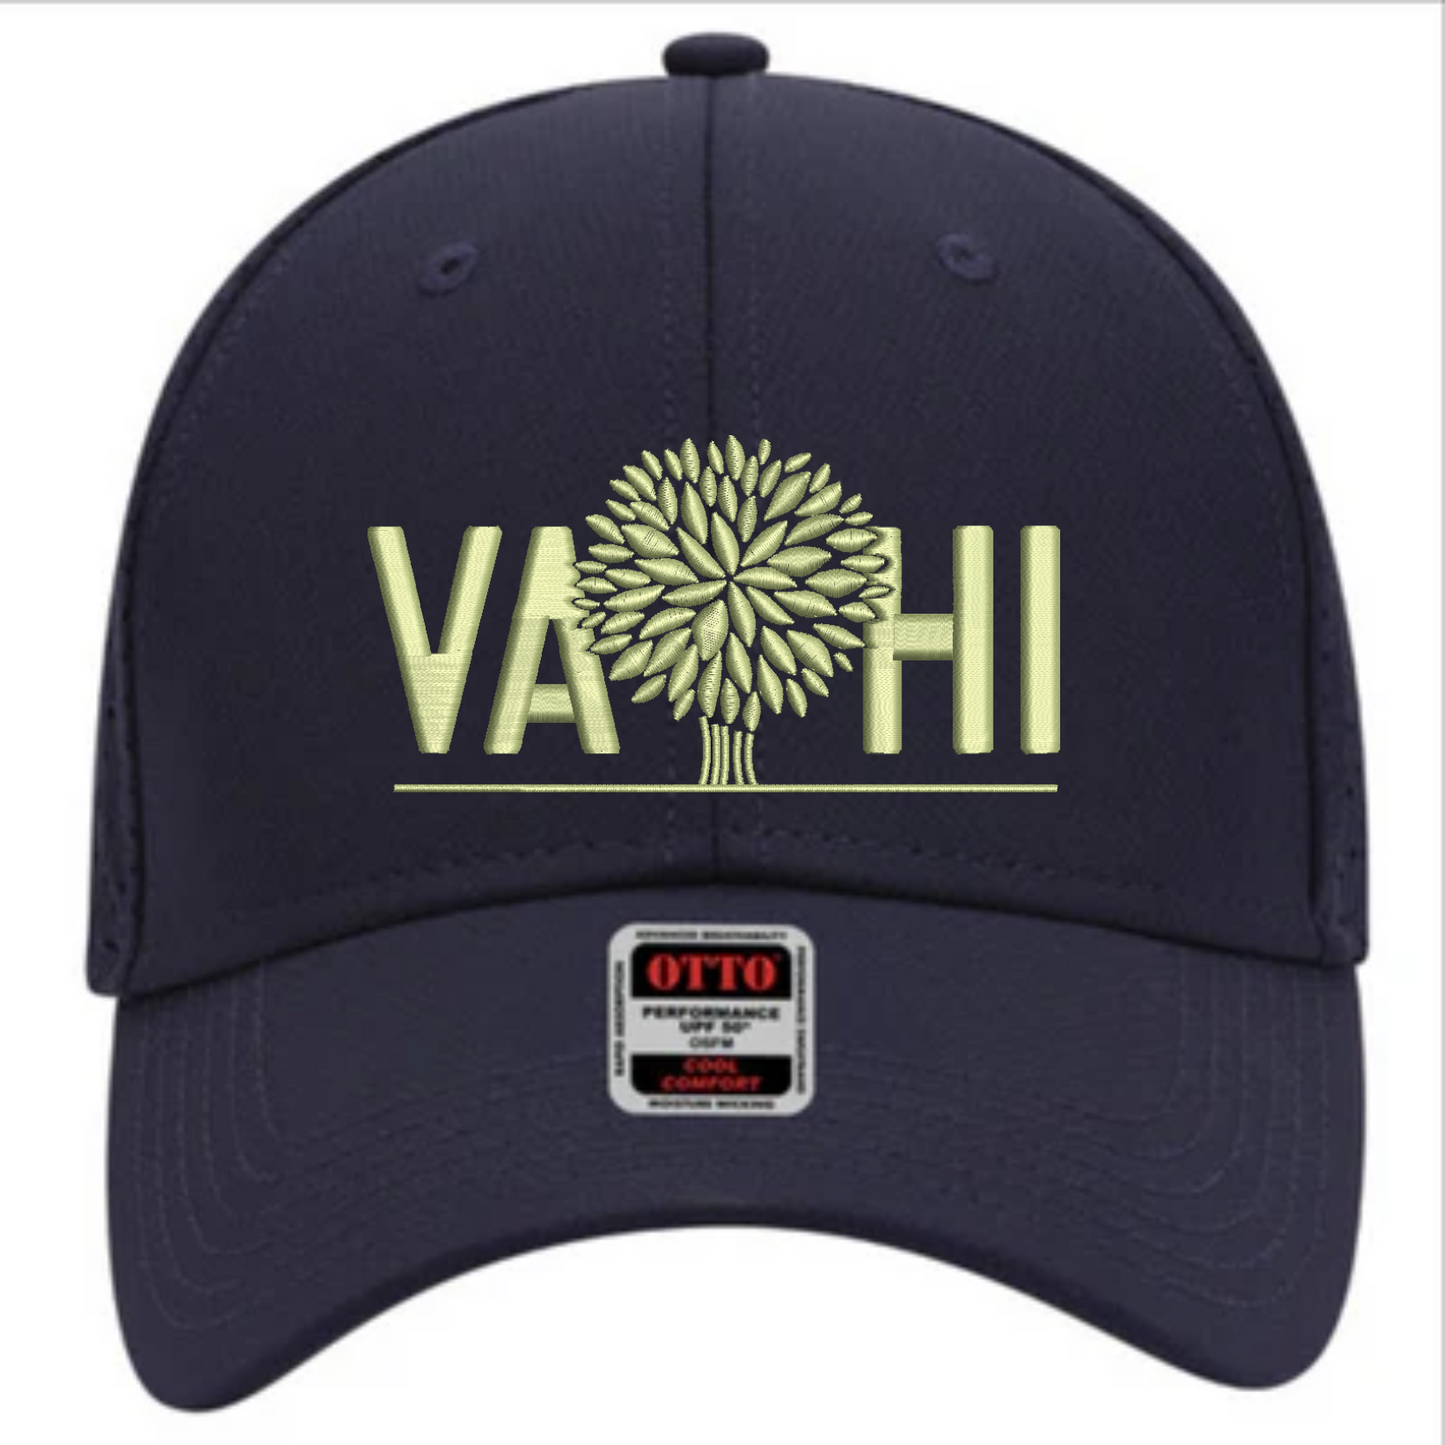 Virginia-Highland Hat